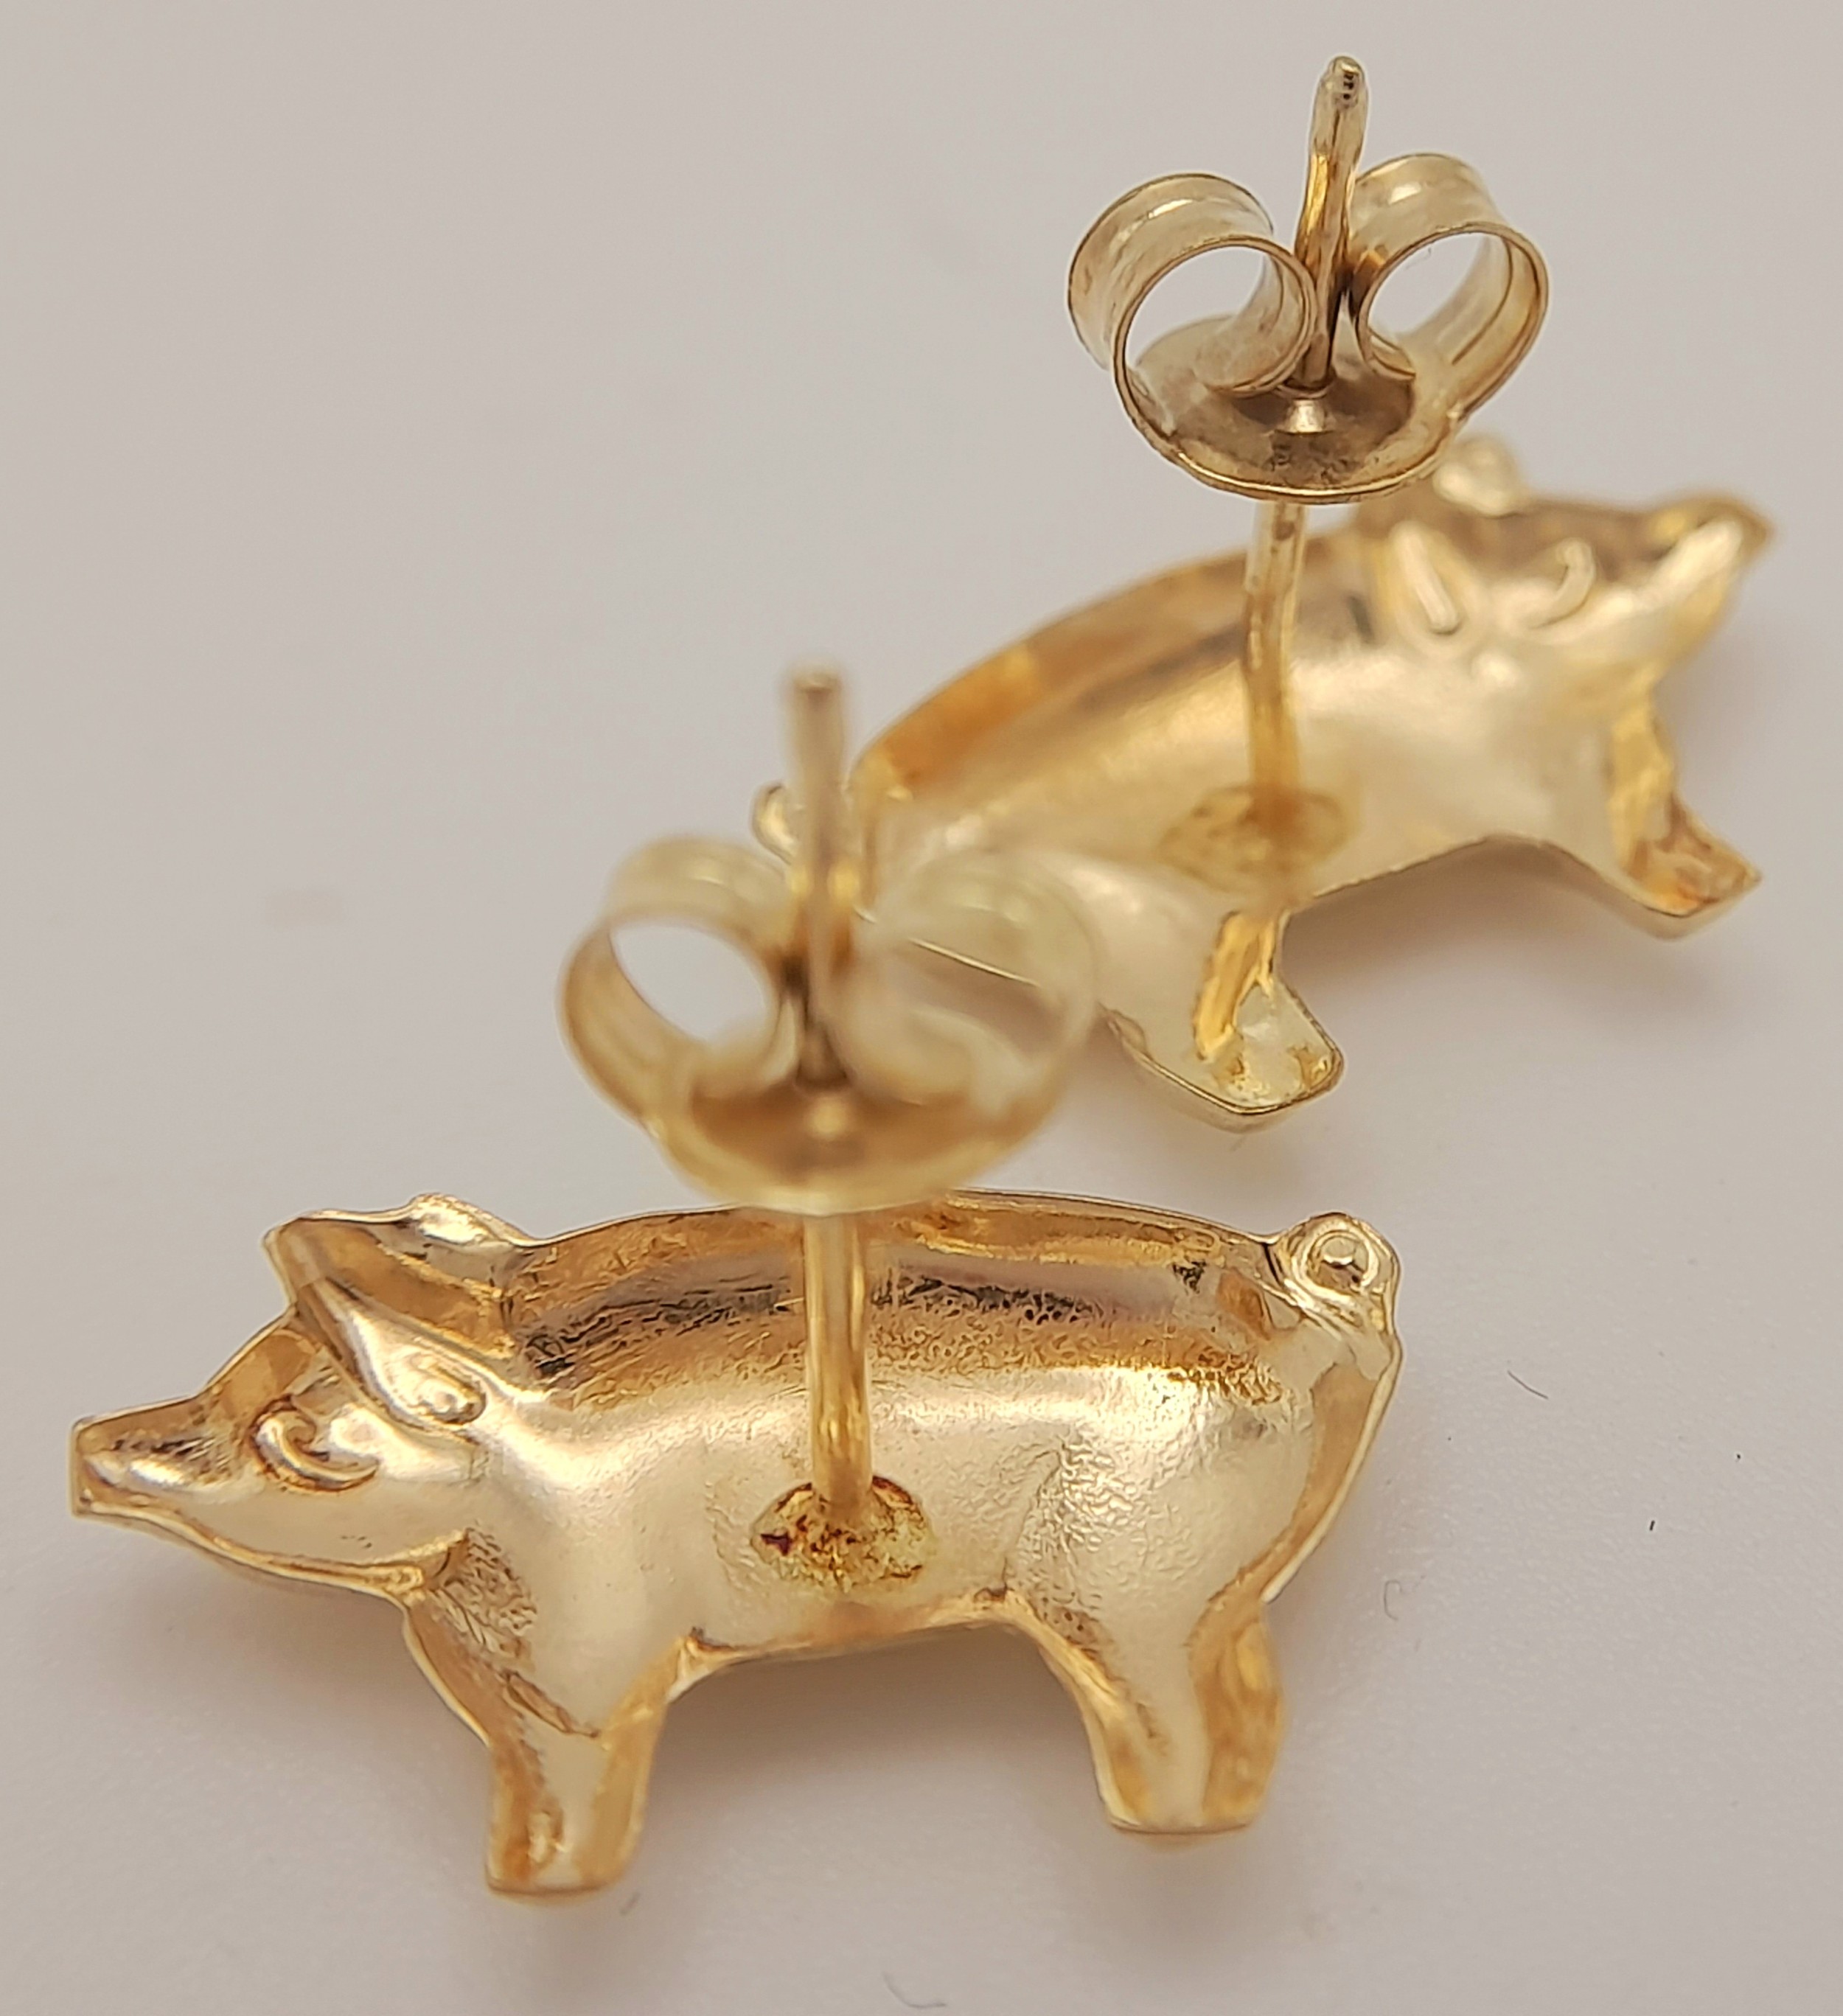 A Pair of 9K Yellow Gold Pig Stud Earrings. 15mm. Ref: 68401N - Image 2 of 4